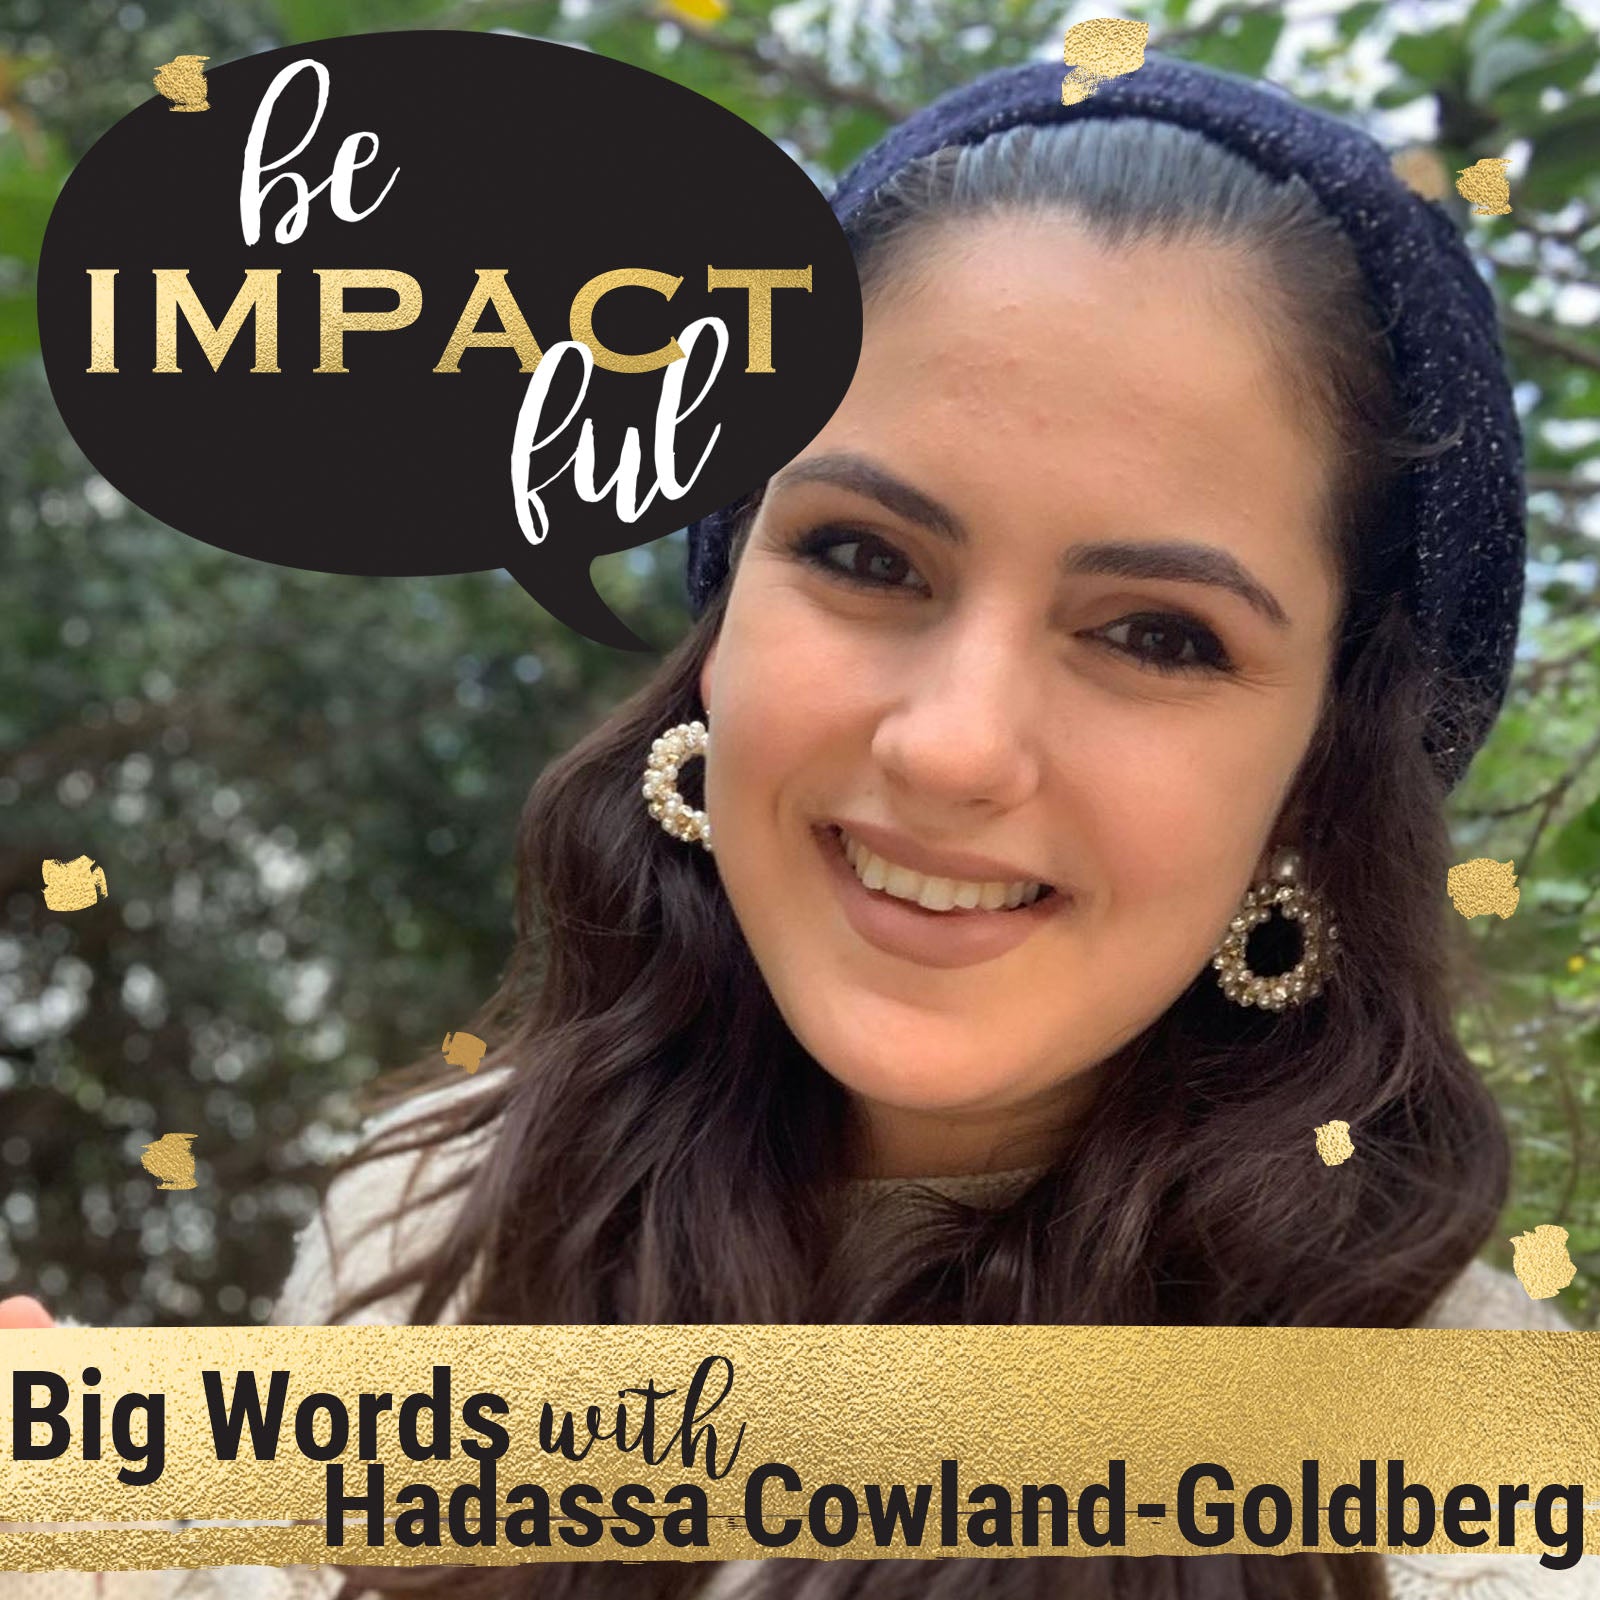 Big Words with Hadassa Cowland-Goldberg